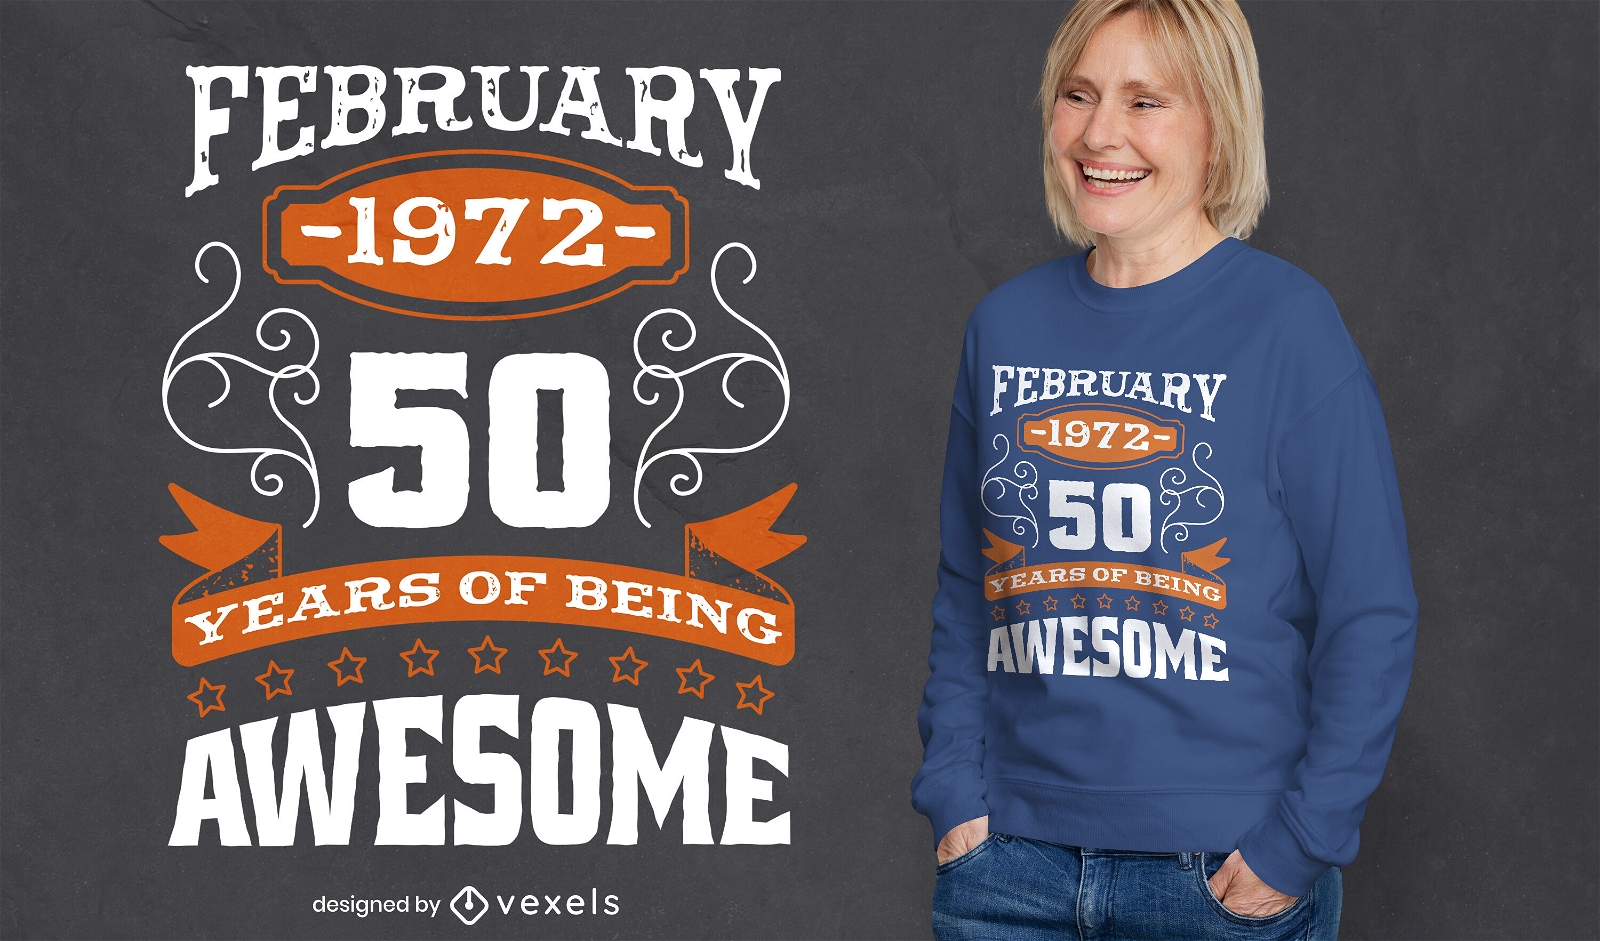 50th birthday quote t-shirt design